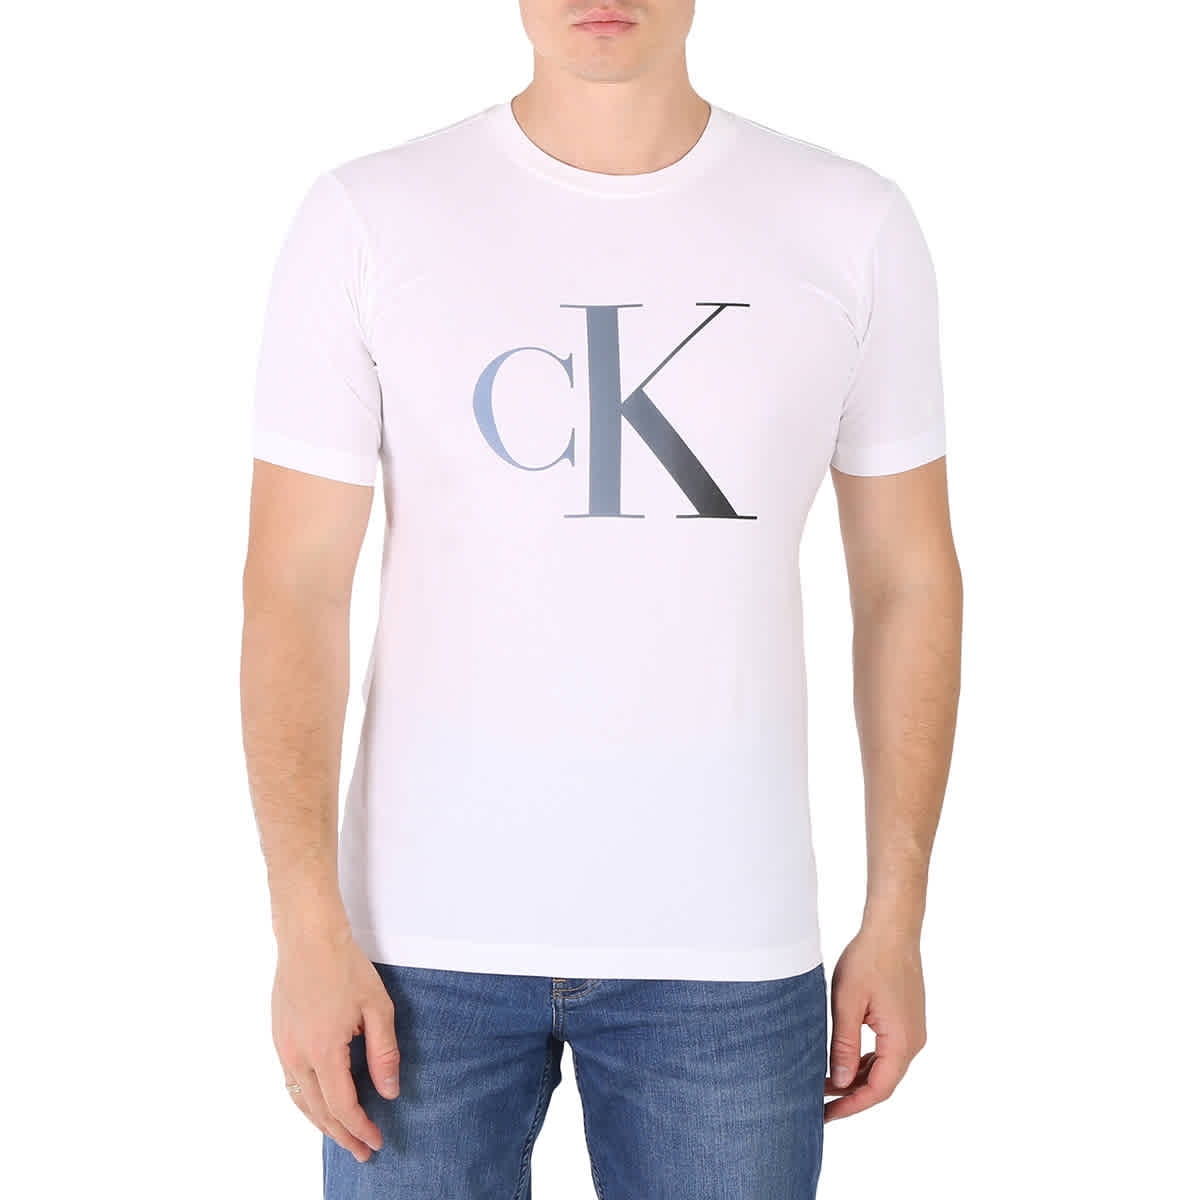 Calvin Klein Bright White Large Illuminated Stretch Logo Body Size T-Shirt, Monogram